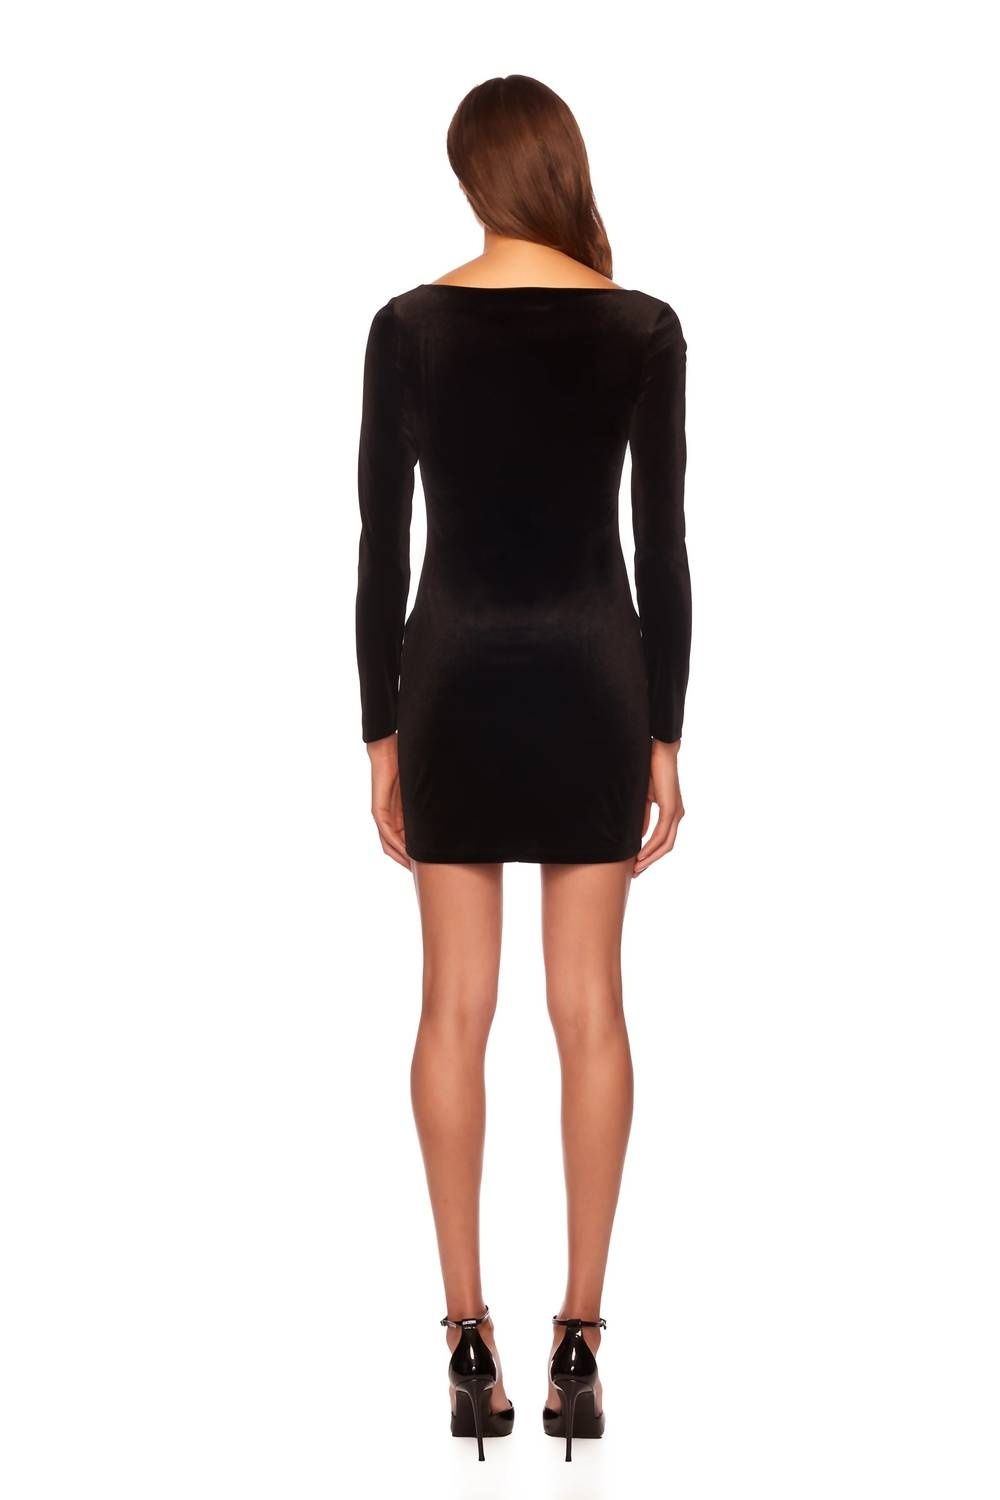 Style 1-1538309445-3236 Susana Monaco Size S Long Sleeve Velvet Black Cocktail Dress on Queenly